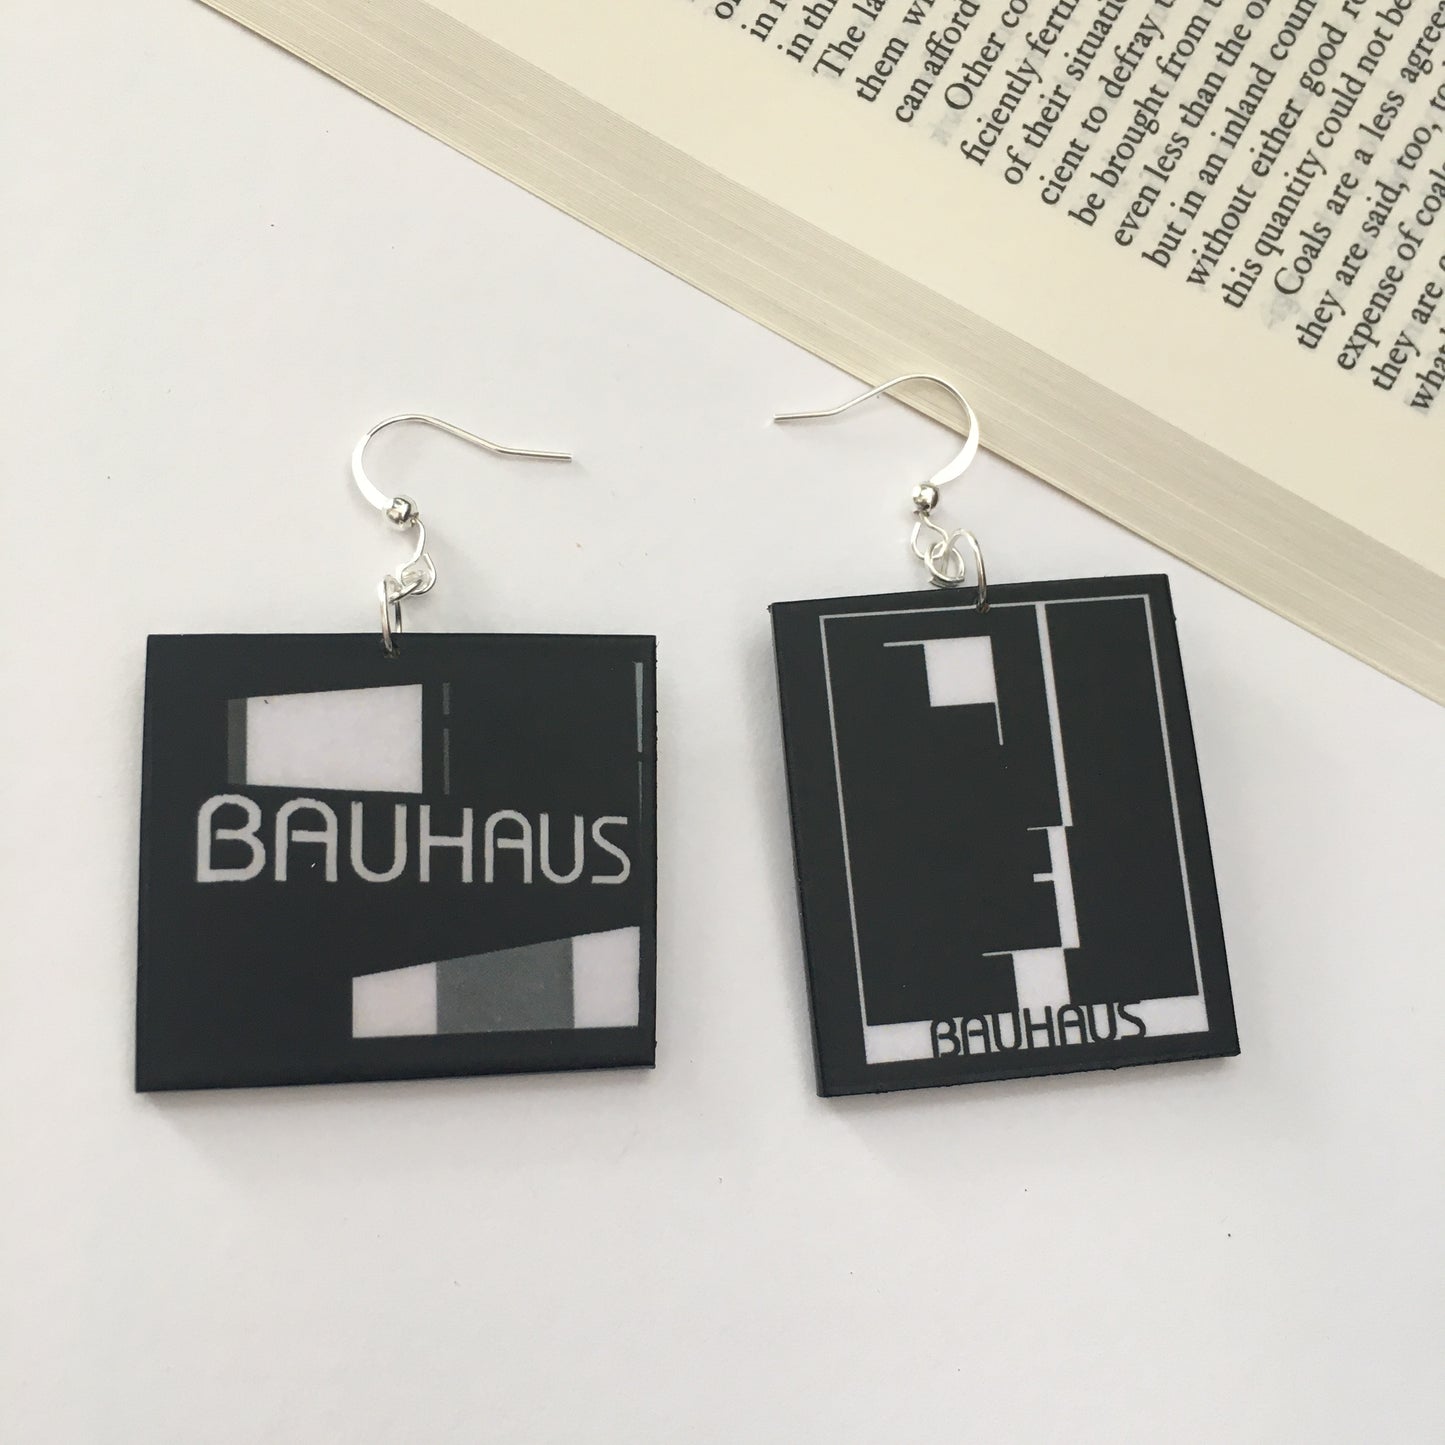 Sustainable, asymmetrical art earrings inspired by the Bauhaus emblem, designed by Oskar Schlemmer.